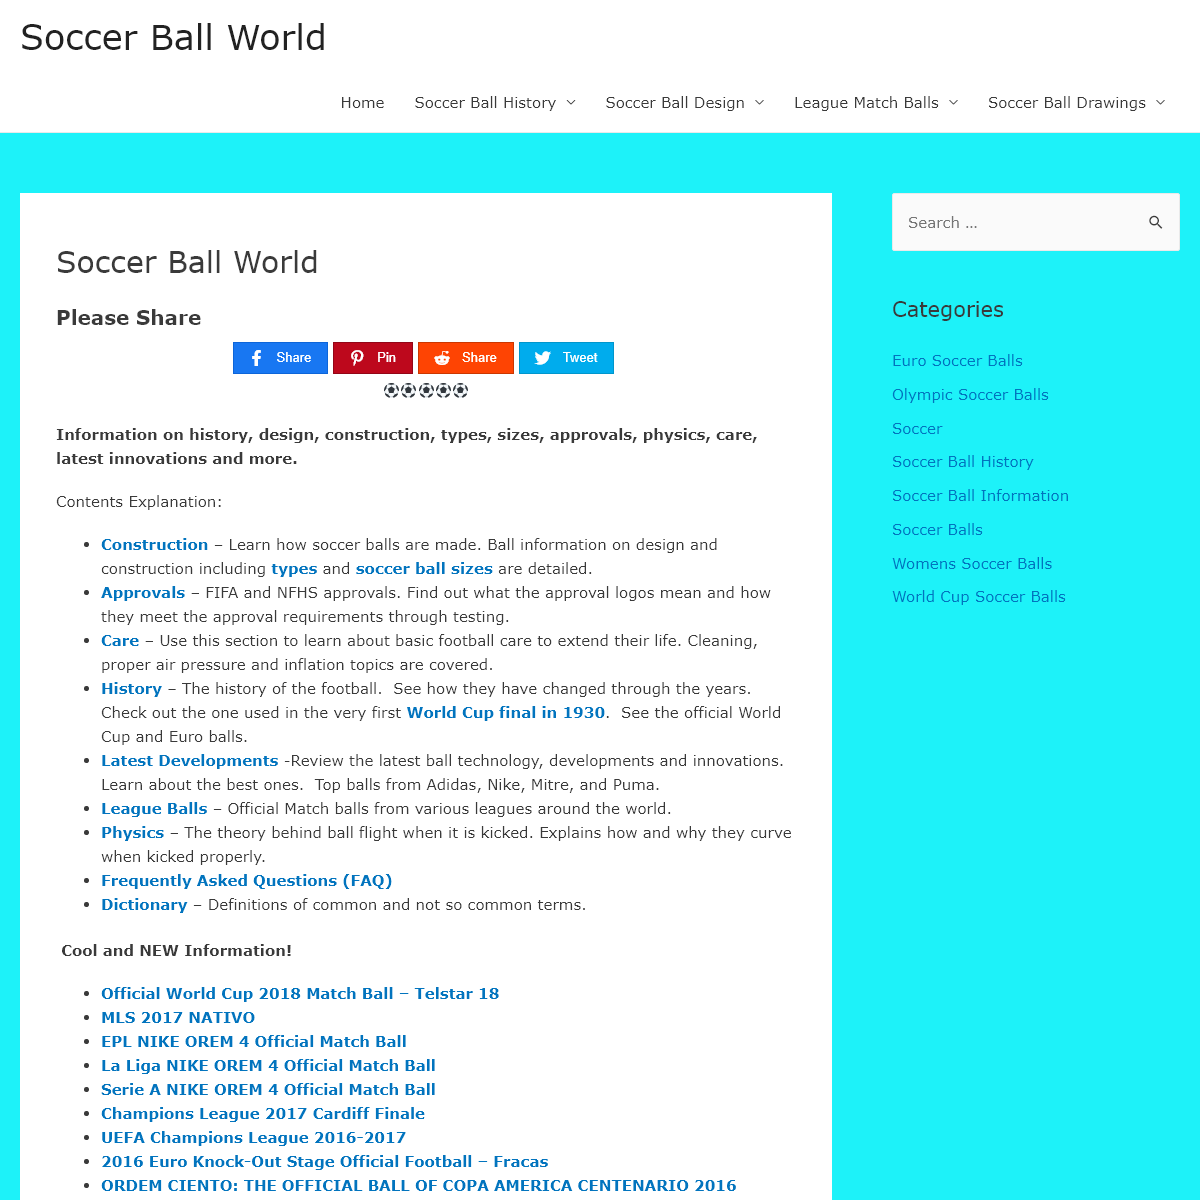 A complete backup of soccerballworld.com